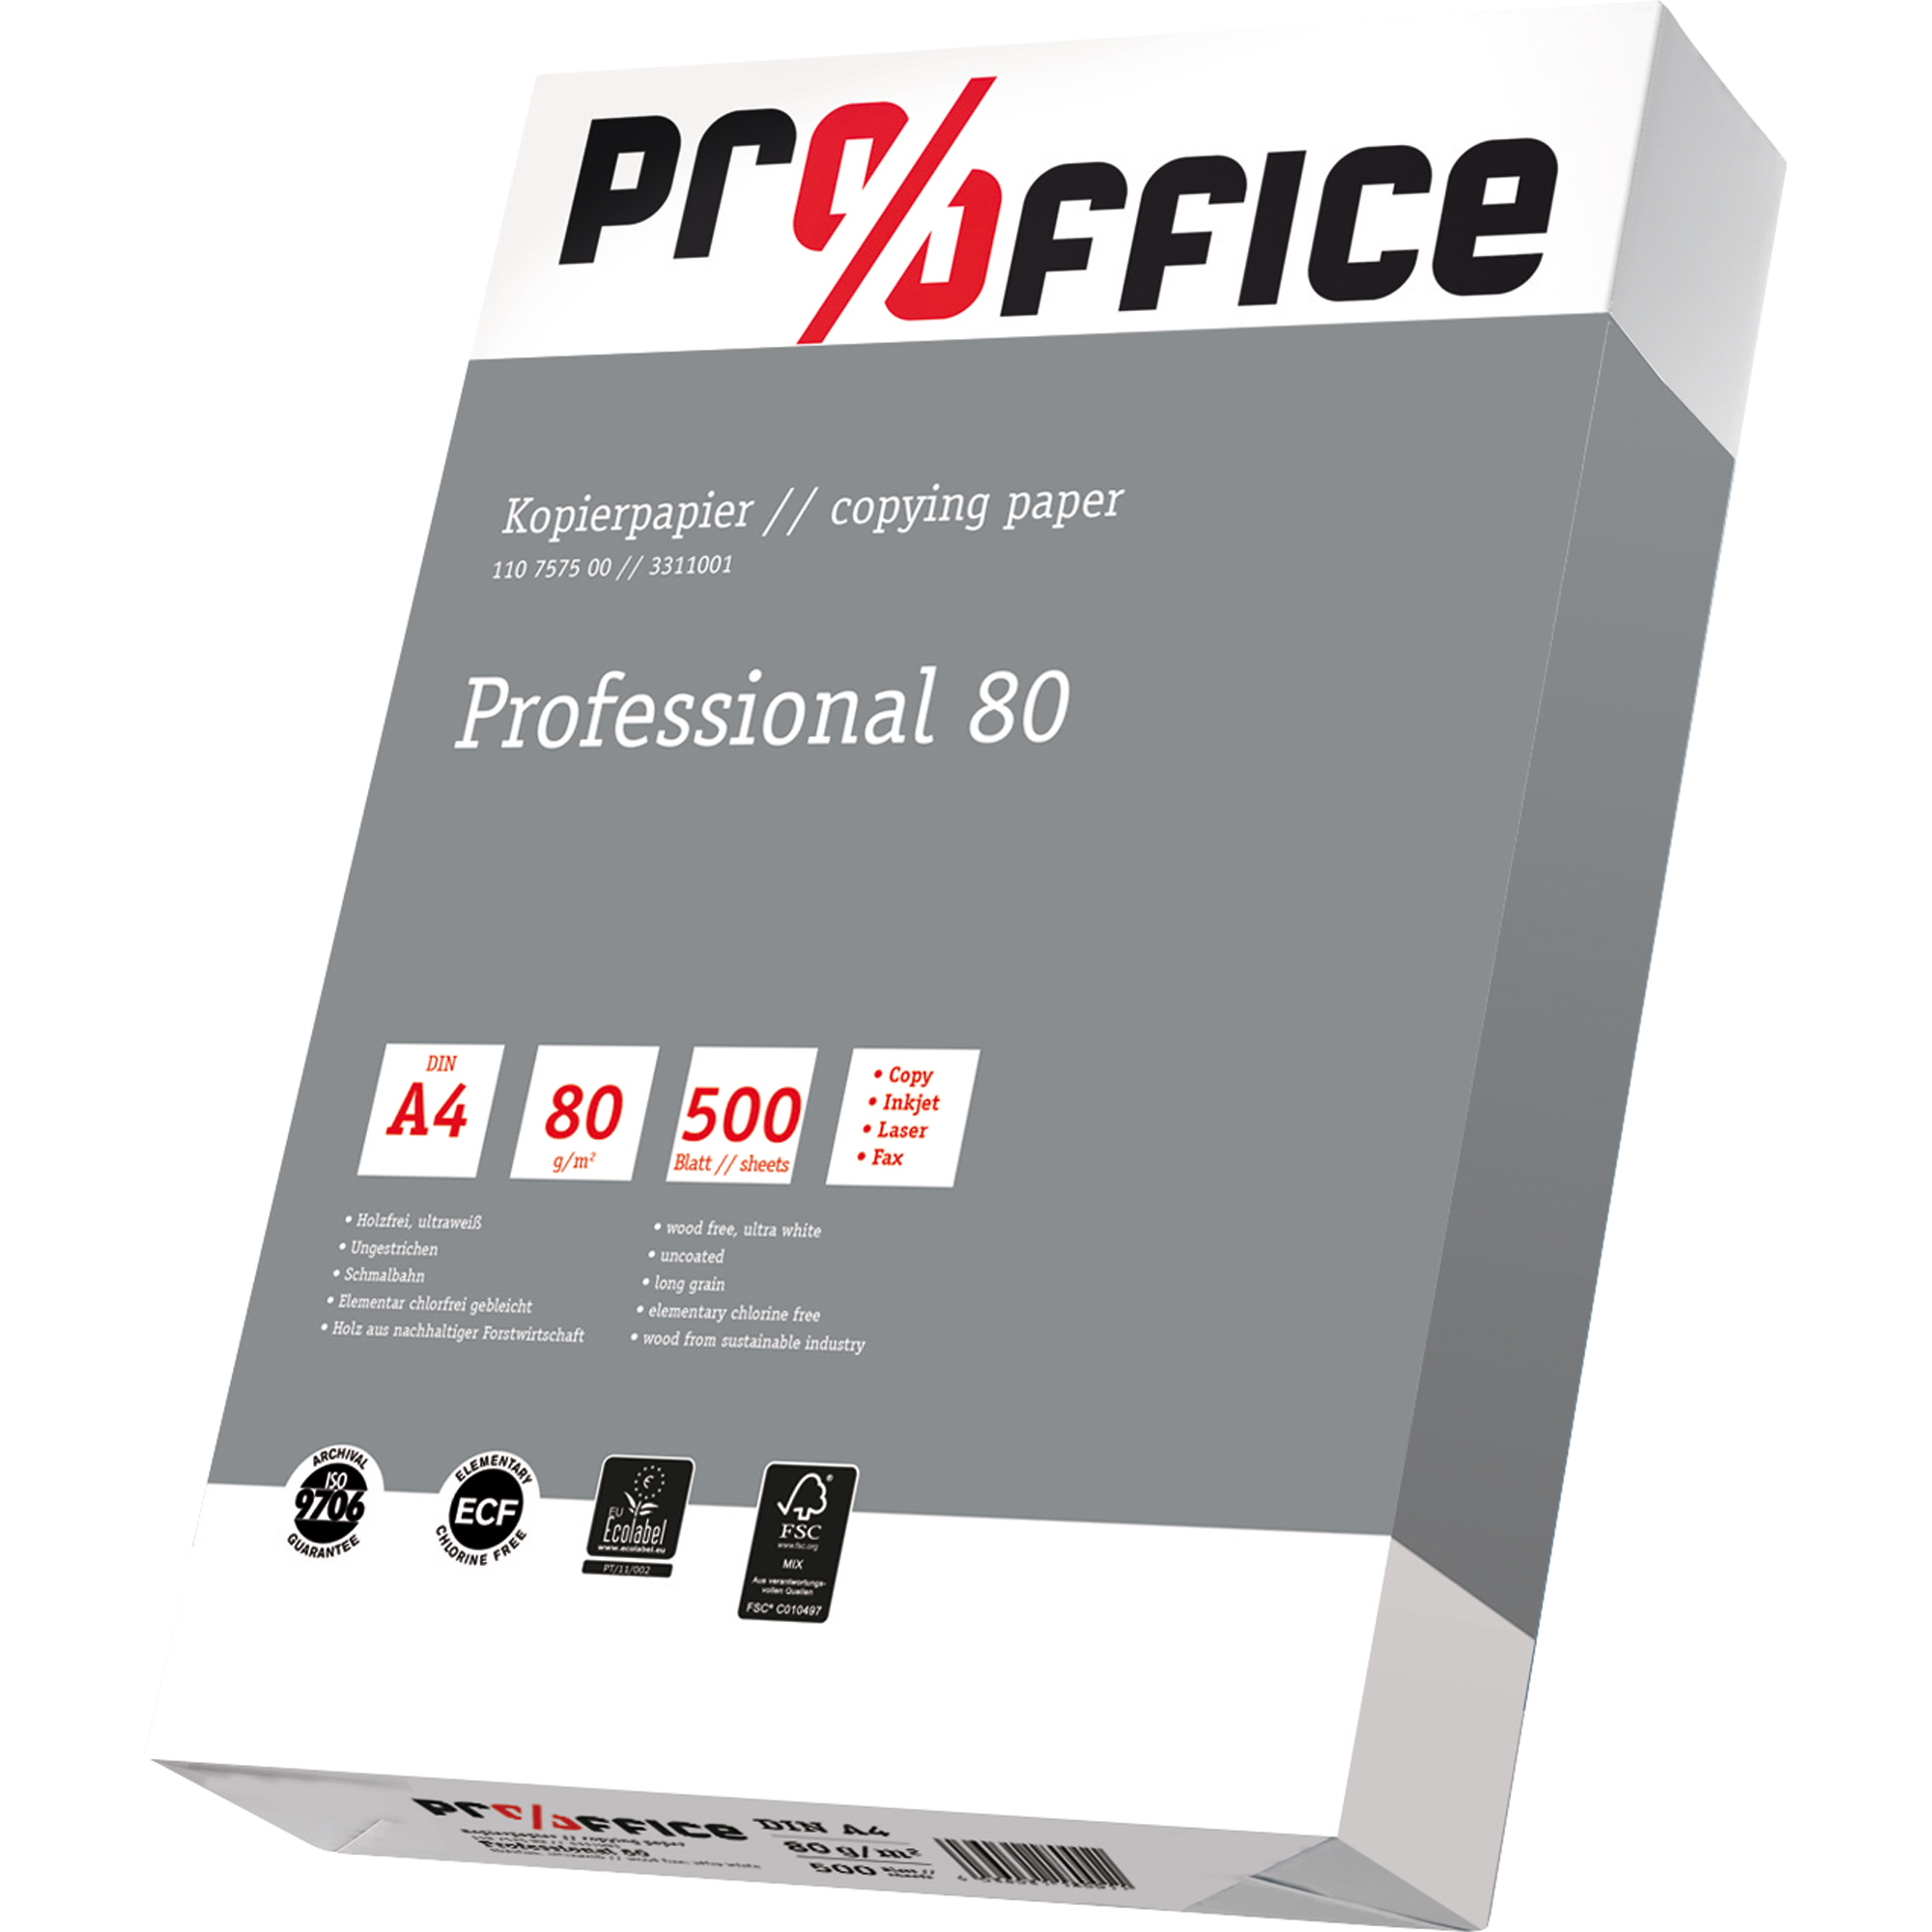 Pro/Office Kopierpapier Professional DIN A4 80 g/m²